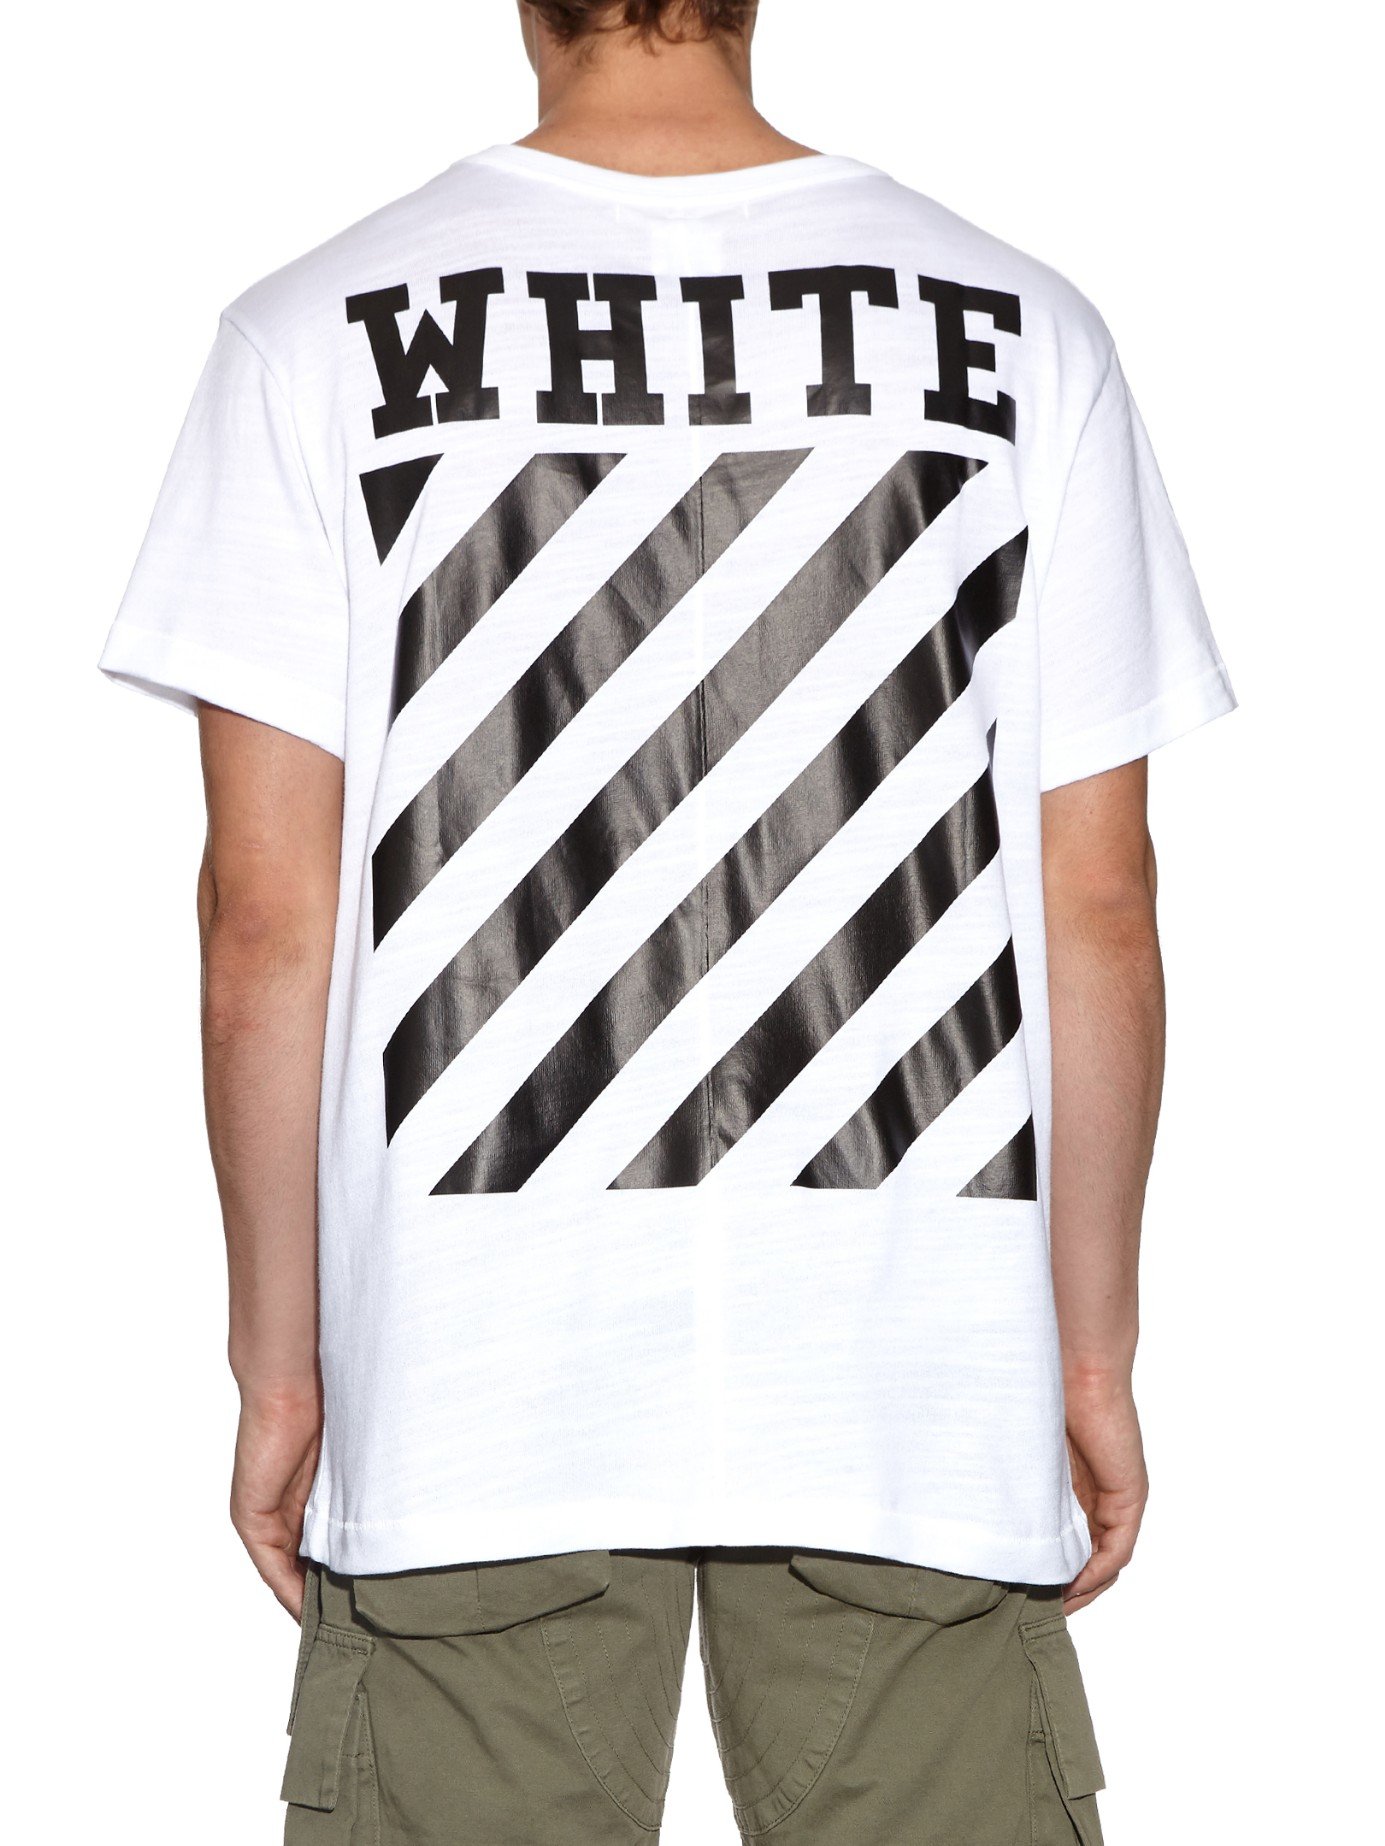 Off-White c/o Virgil Abloh Logo-Printed Cotton T-Shirt in White for Men